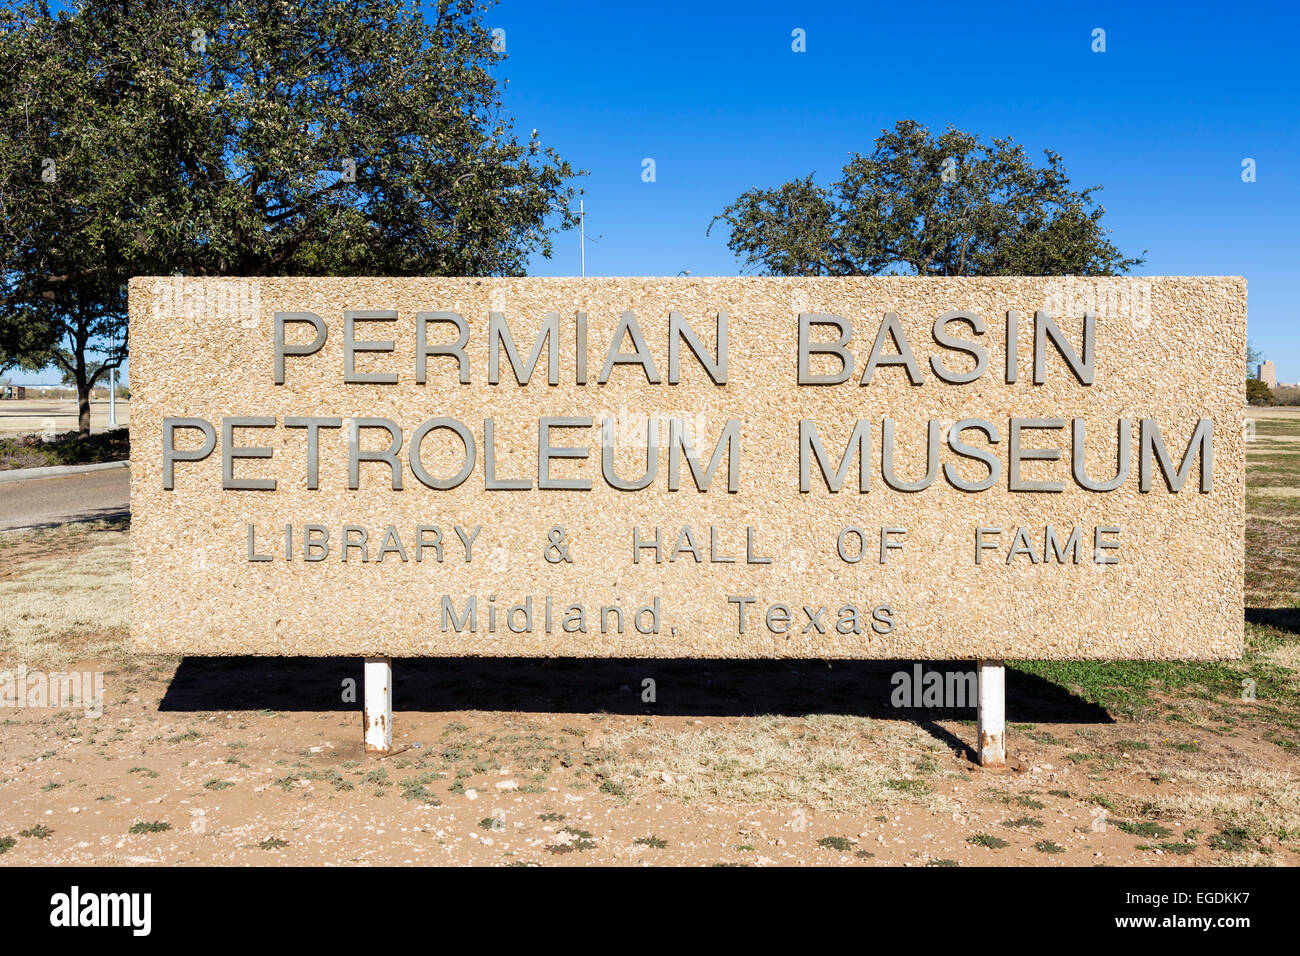 The Permian Basin Petroleum Museum, Midland, Texas, USA Stock Photo